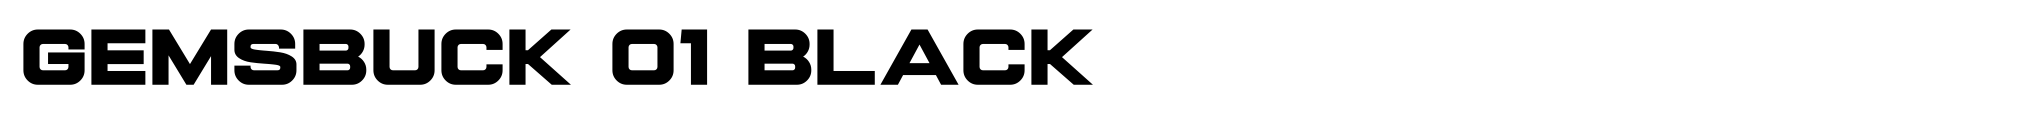 Gemsbuck 01 Black image